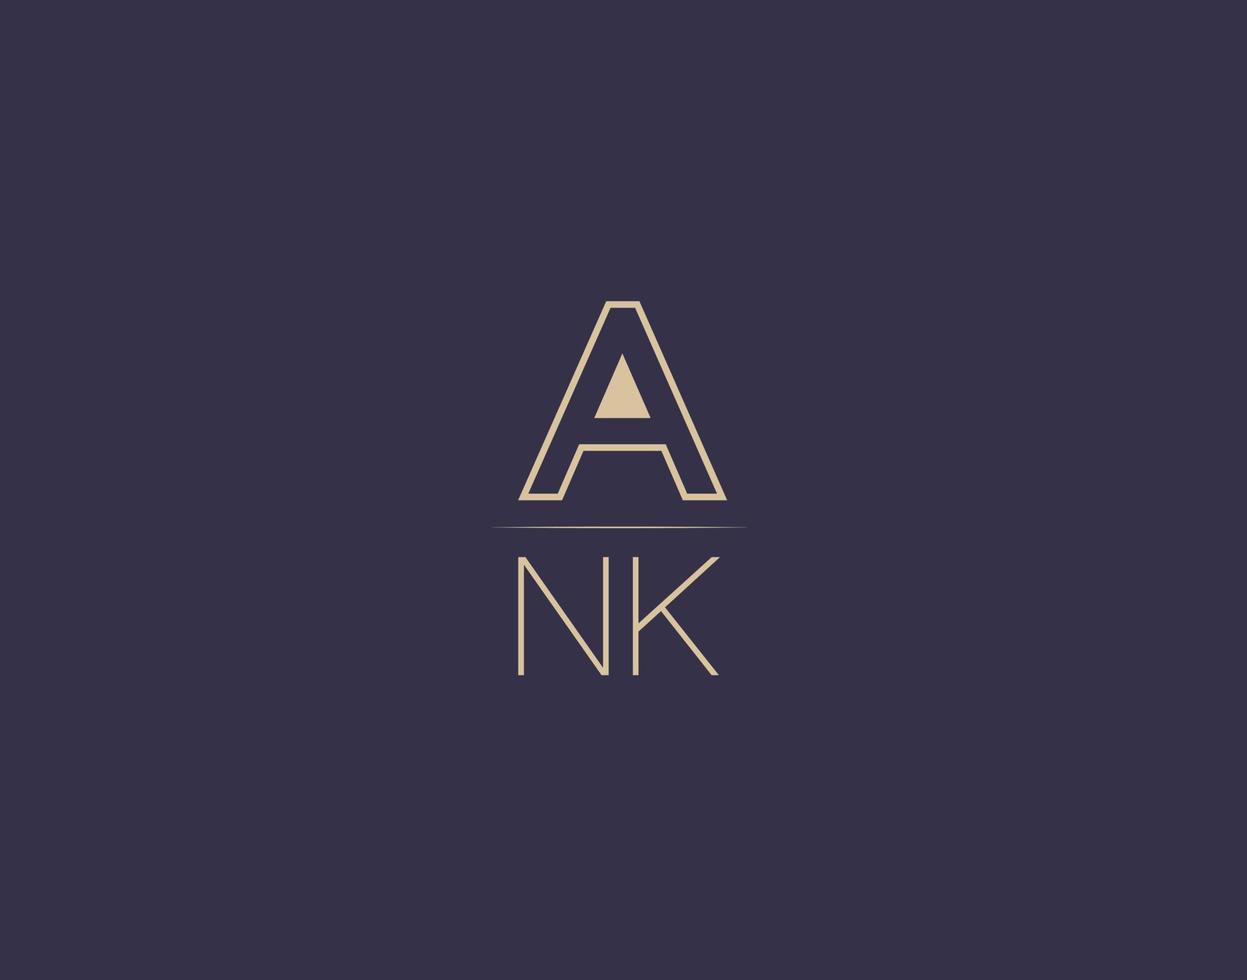 ank brief logo ontwerp modern minimalistische vector afbeeldingen